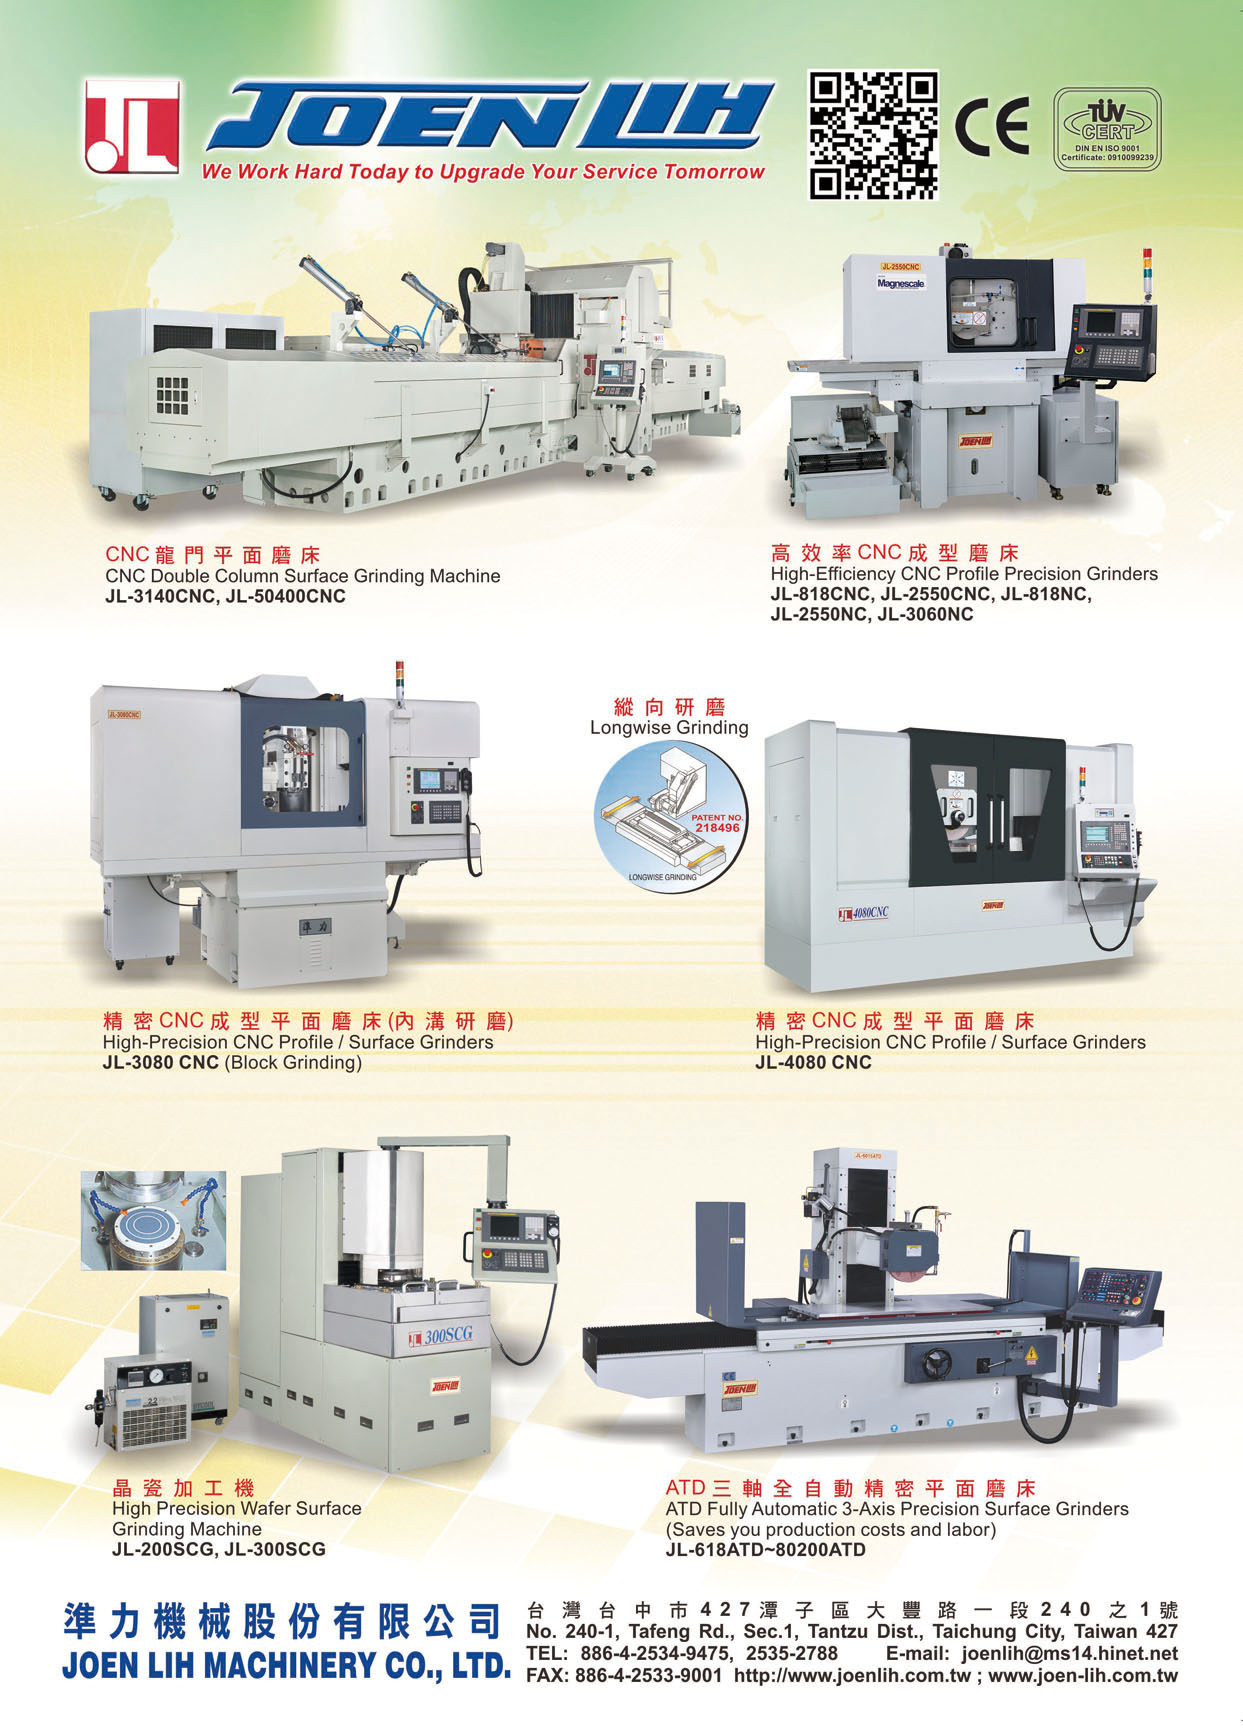 Taiwan Machinery JOEN LIH MACHINERY CO., LTD.